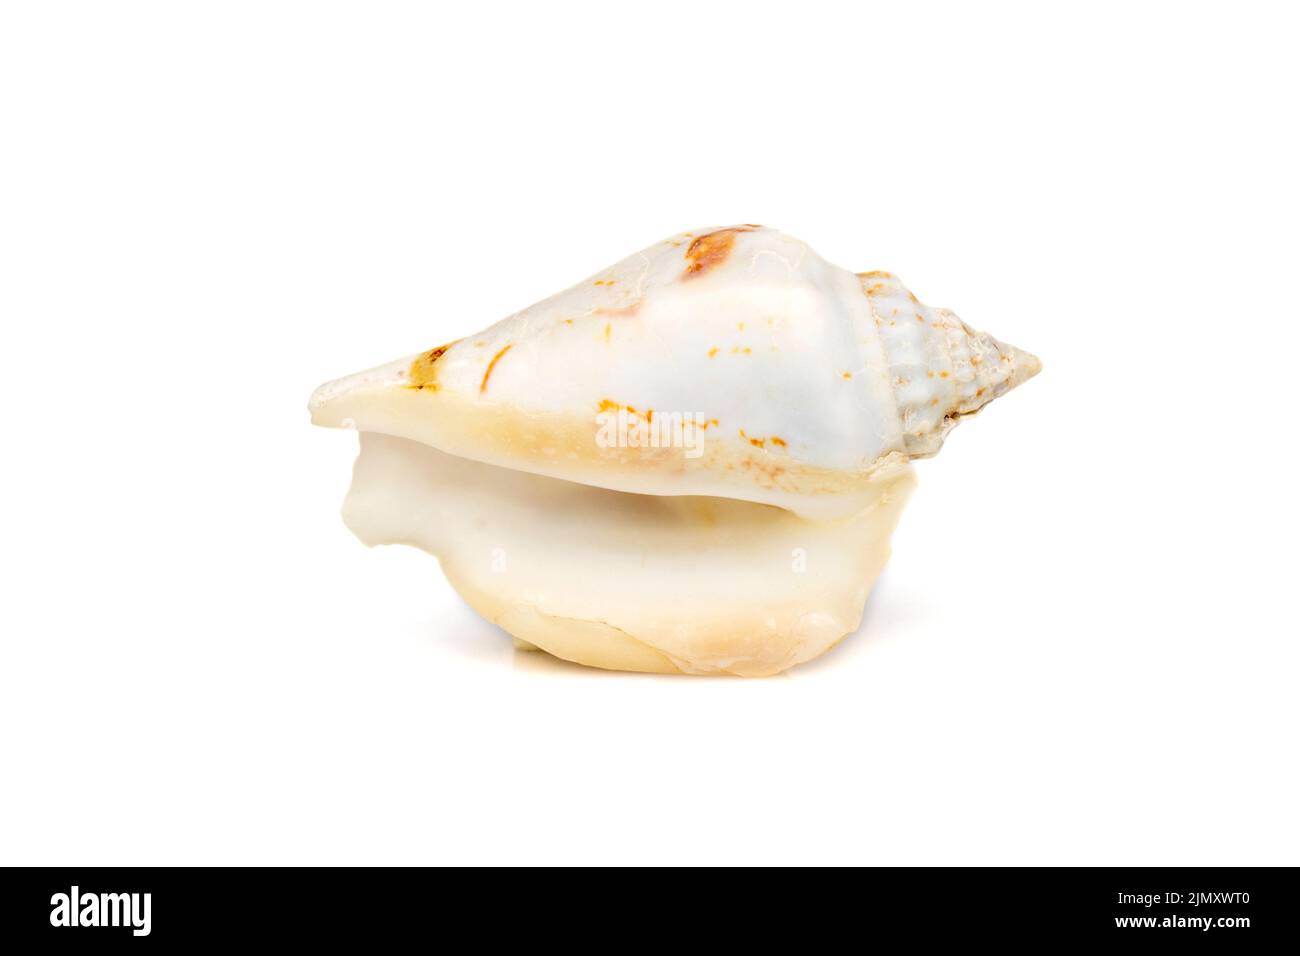 Image of seashells humped conch (Gibberulus gibbosus) on a white background. Undersea Animals. Sea Shells. Stock Photo